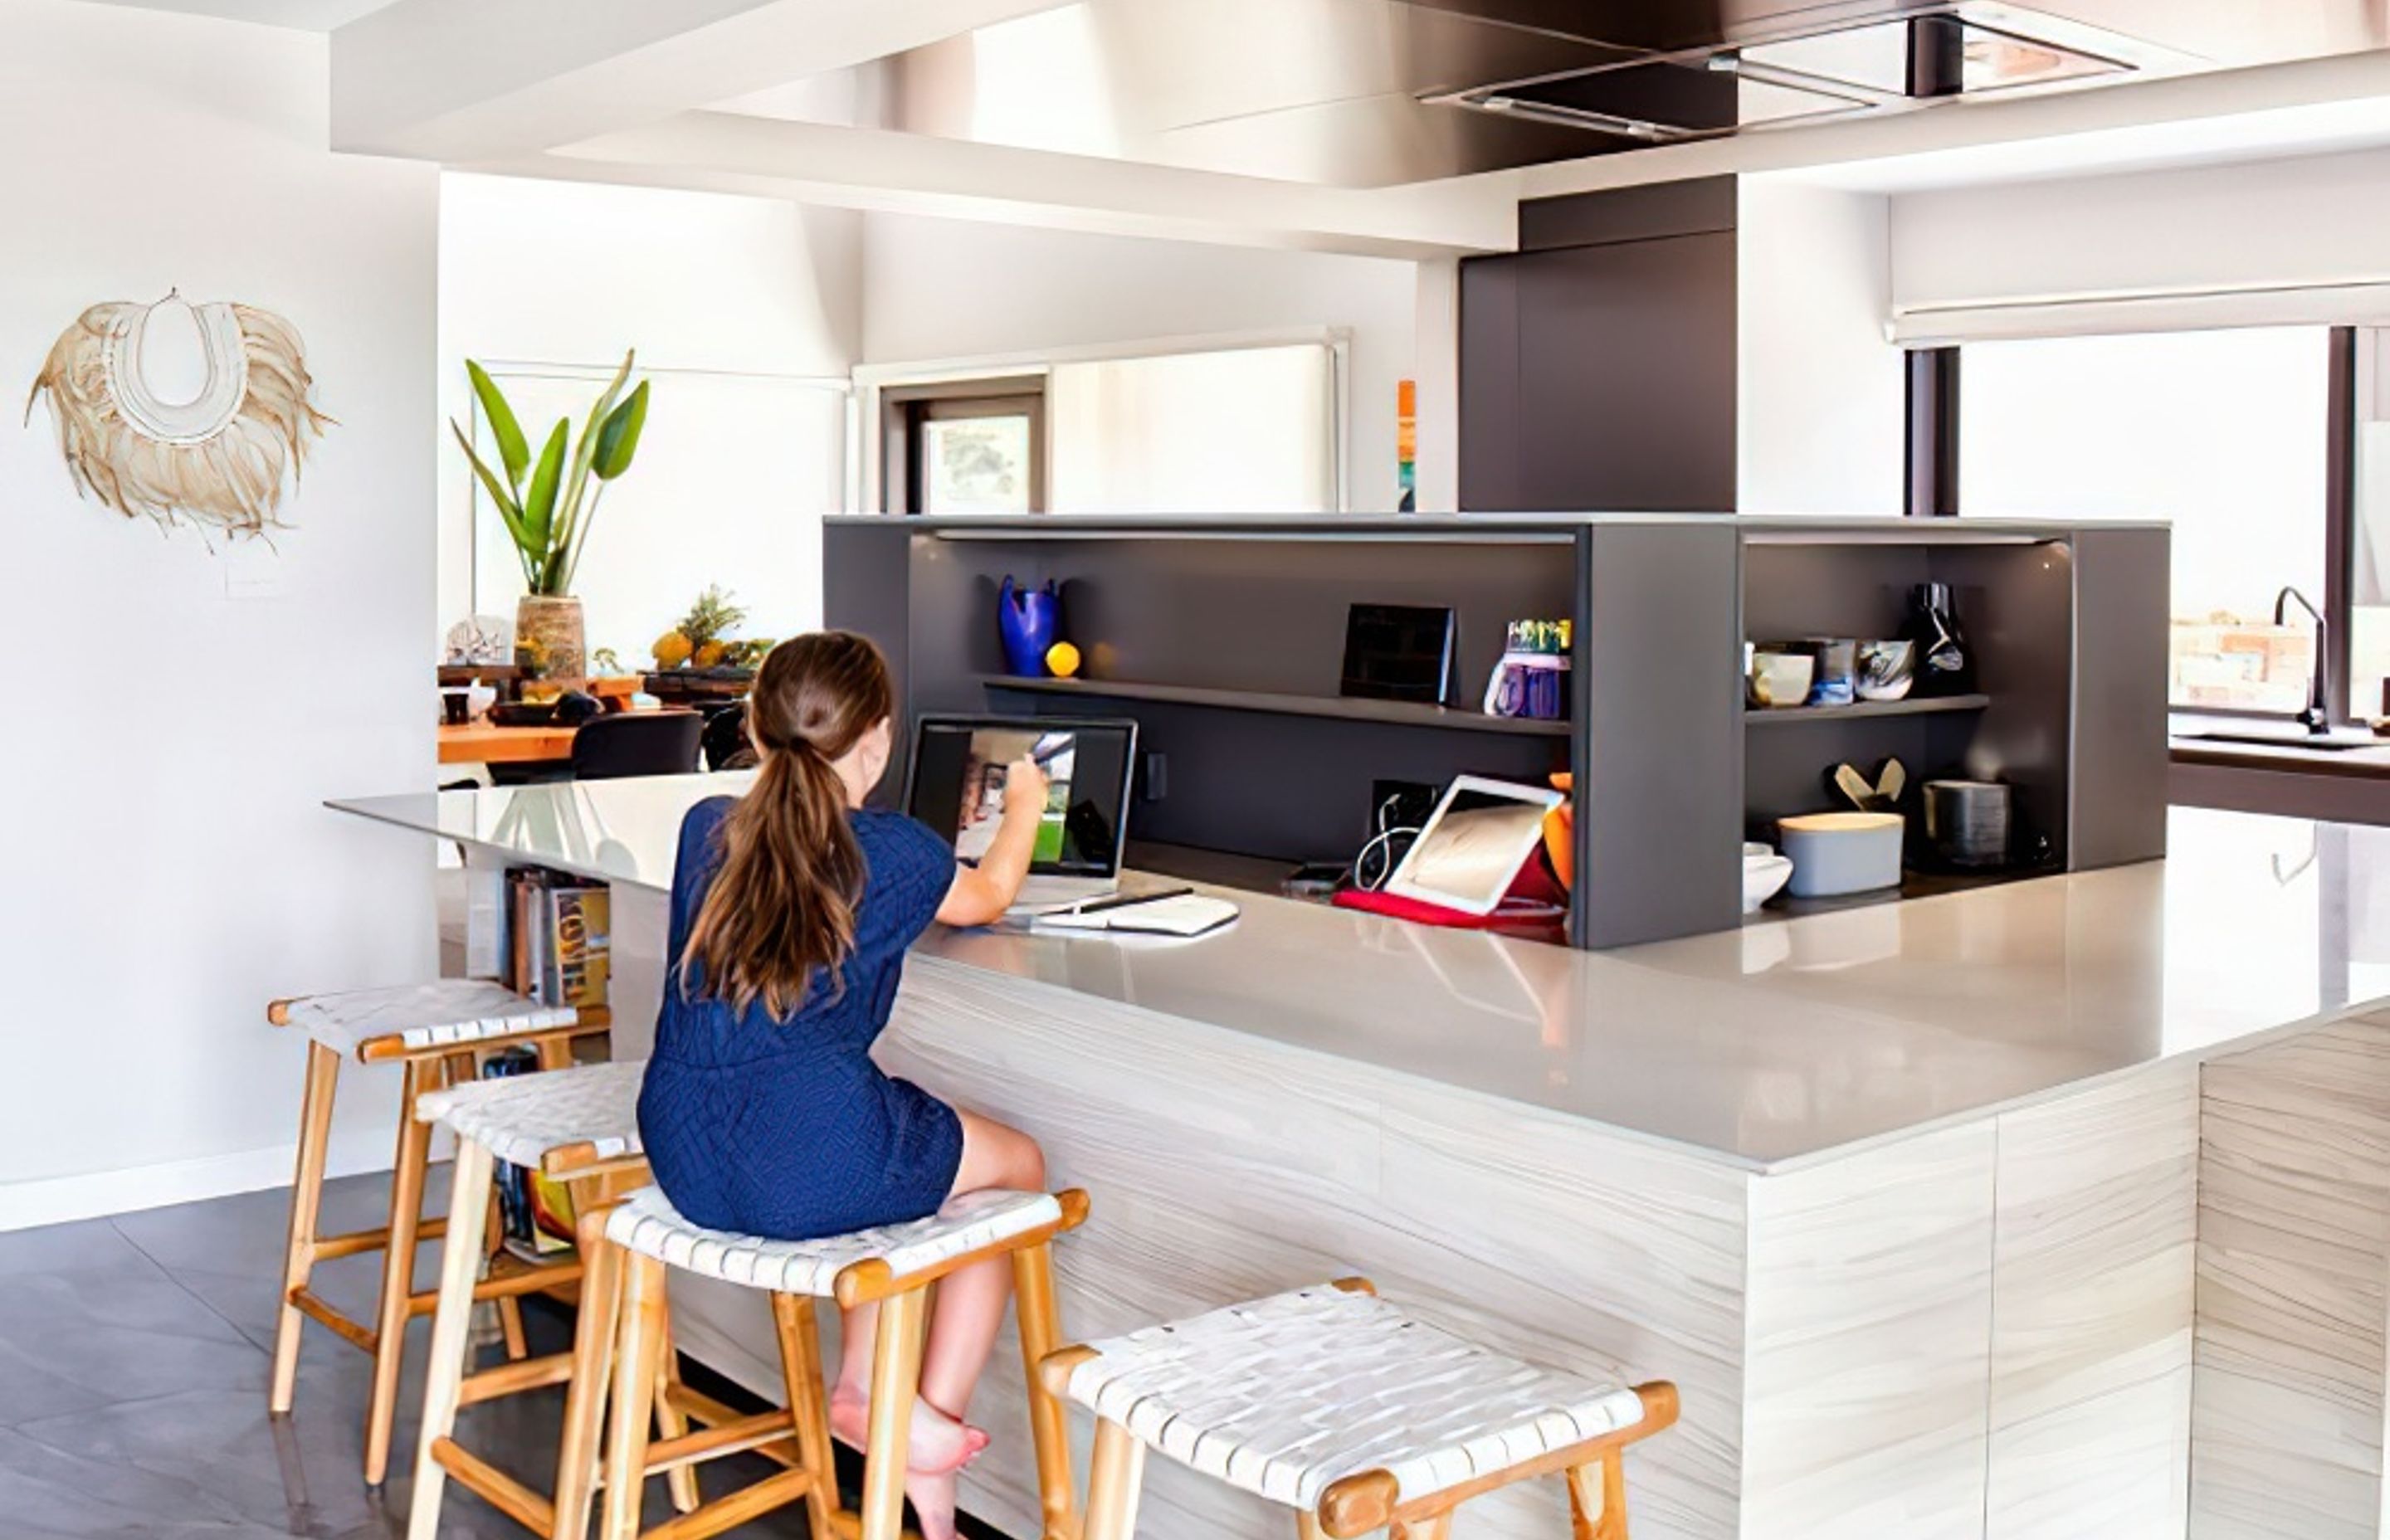 Designer Kitchen – Finalist - Bulli, kitchen renovation on NSW south coast